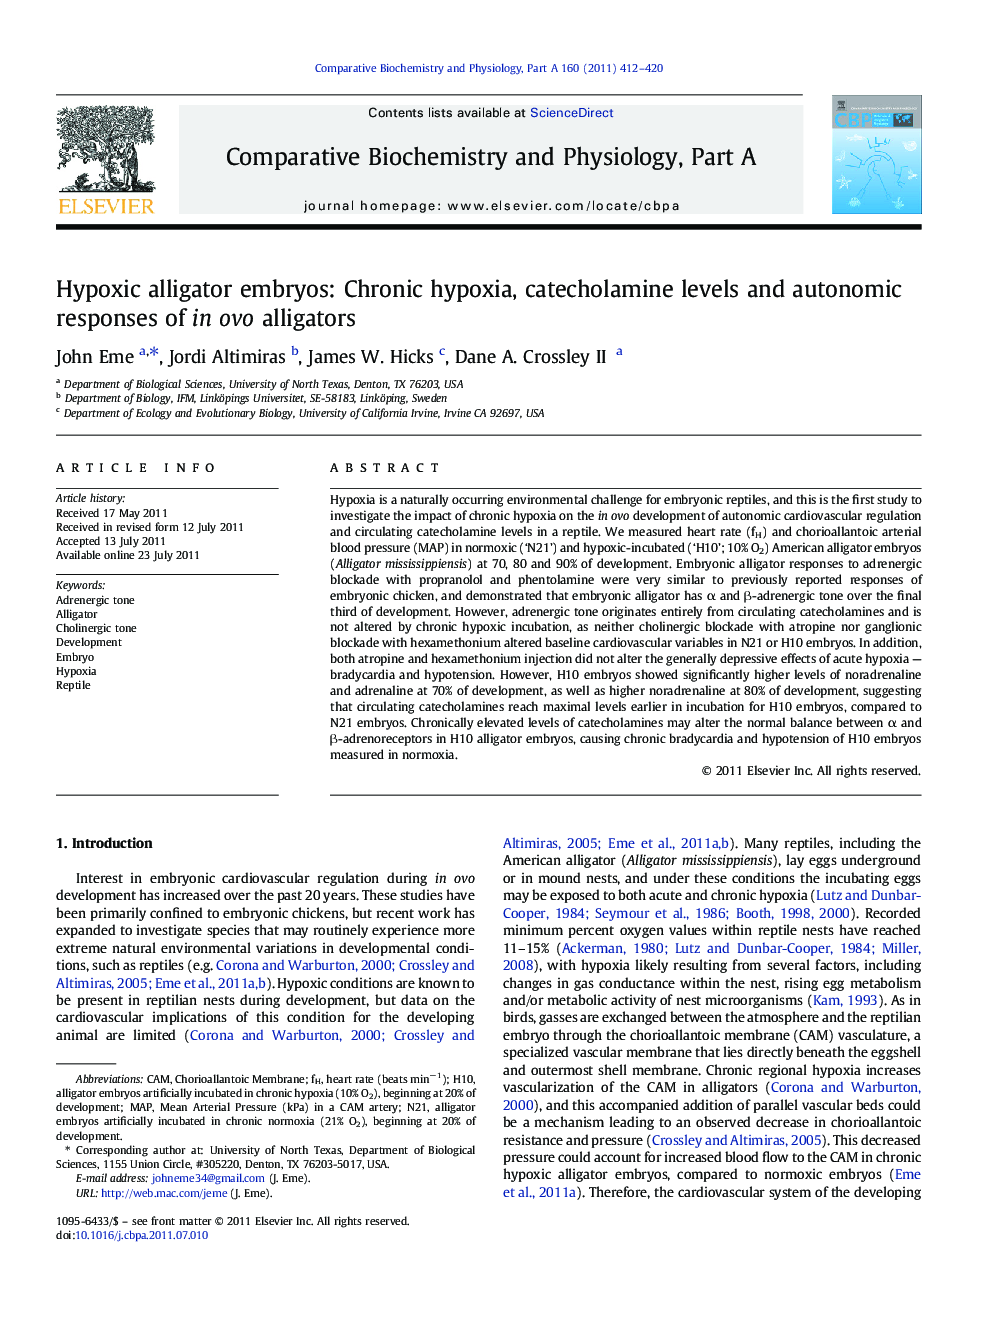 Hypoxic alligator embryos: Chronic hypoxia, catecholamine levels and autonomic responses of in ovo alligators